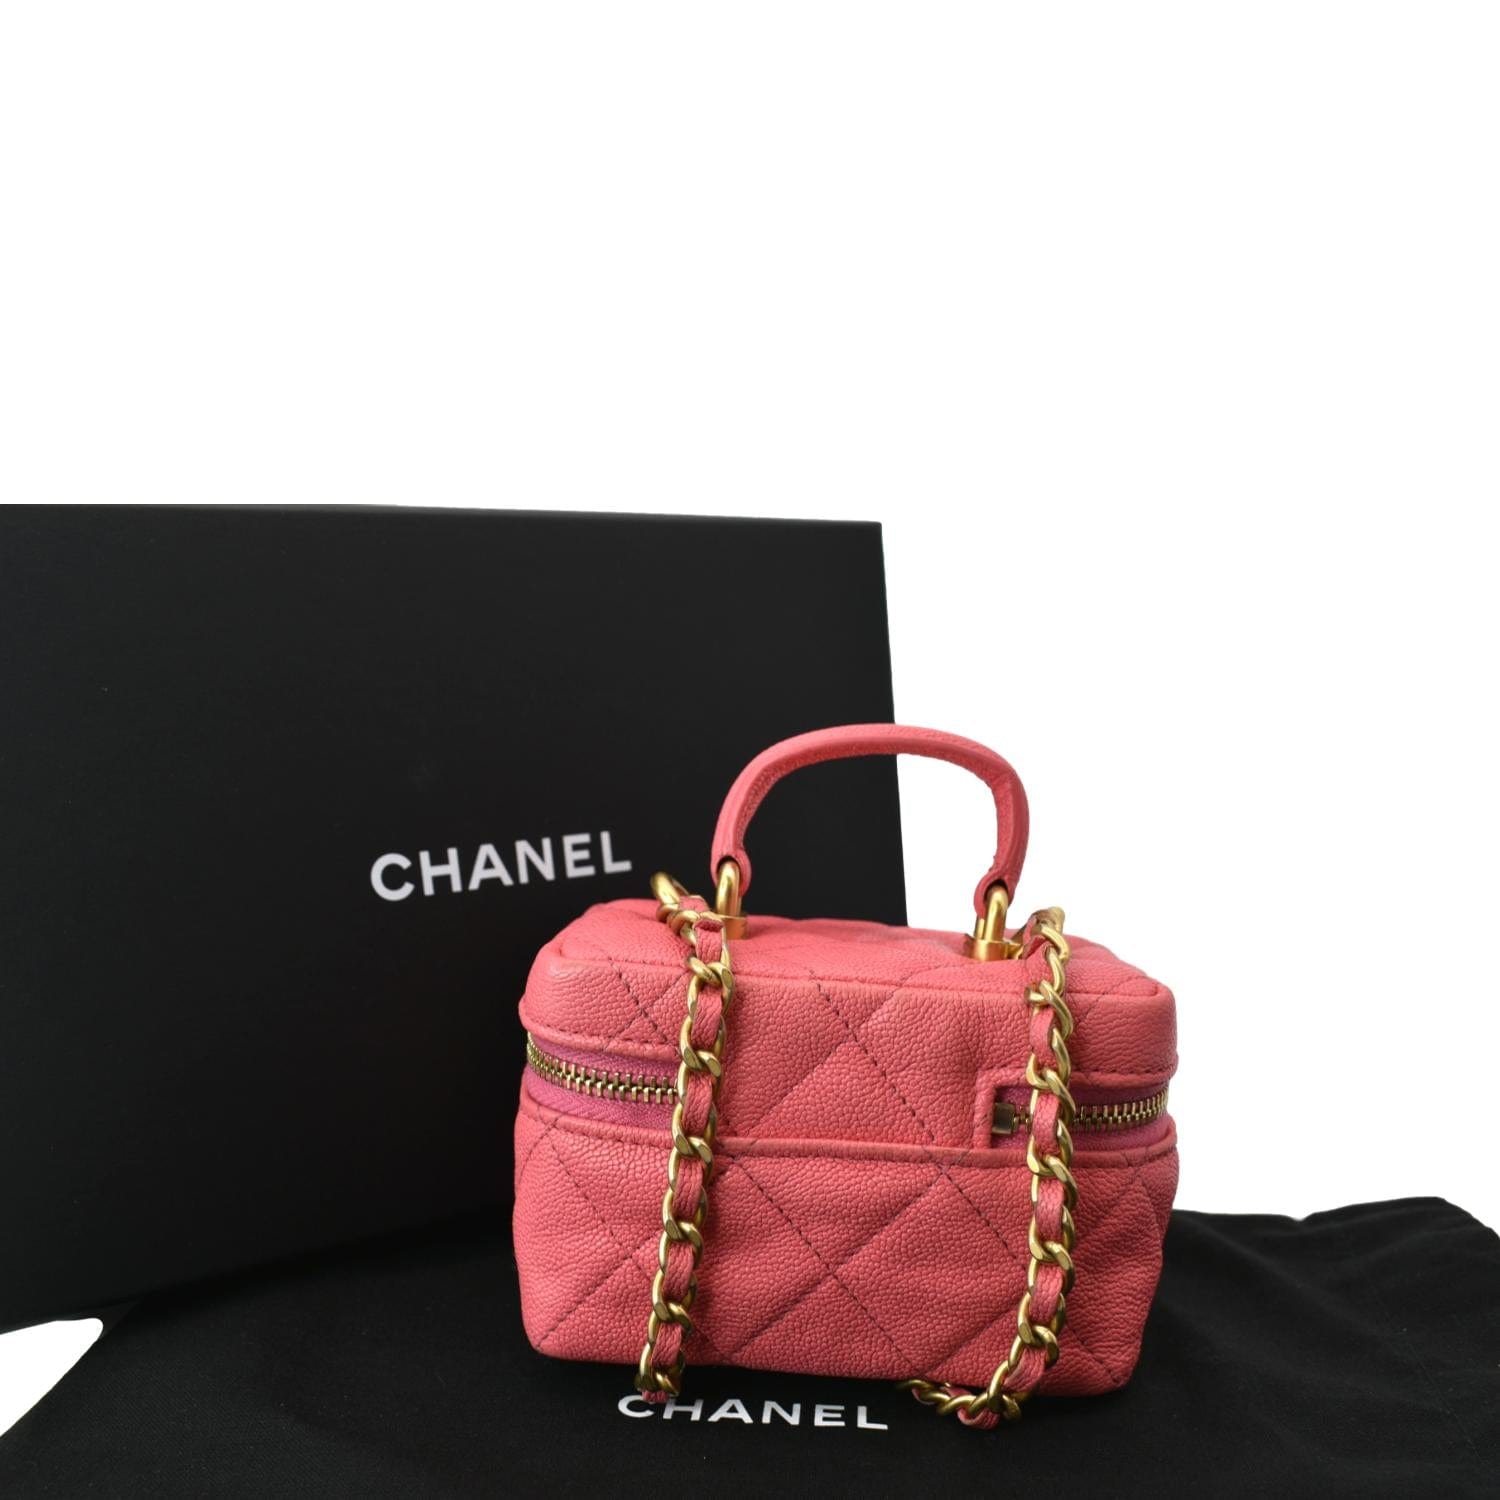 Chanel top handle mini vanity (new version)! cutest bag ever